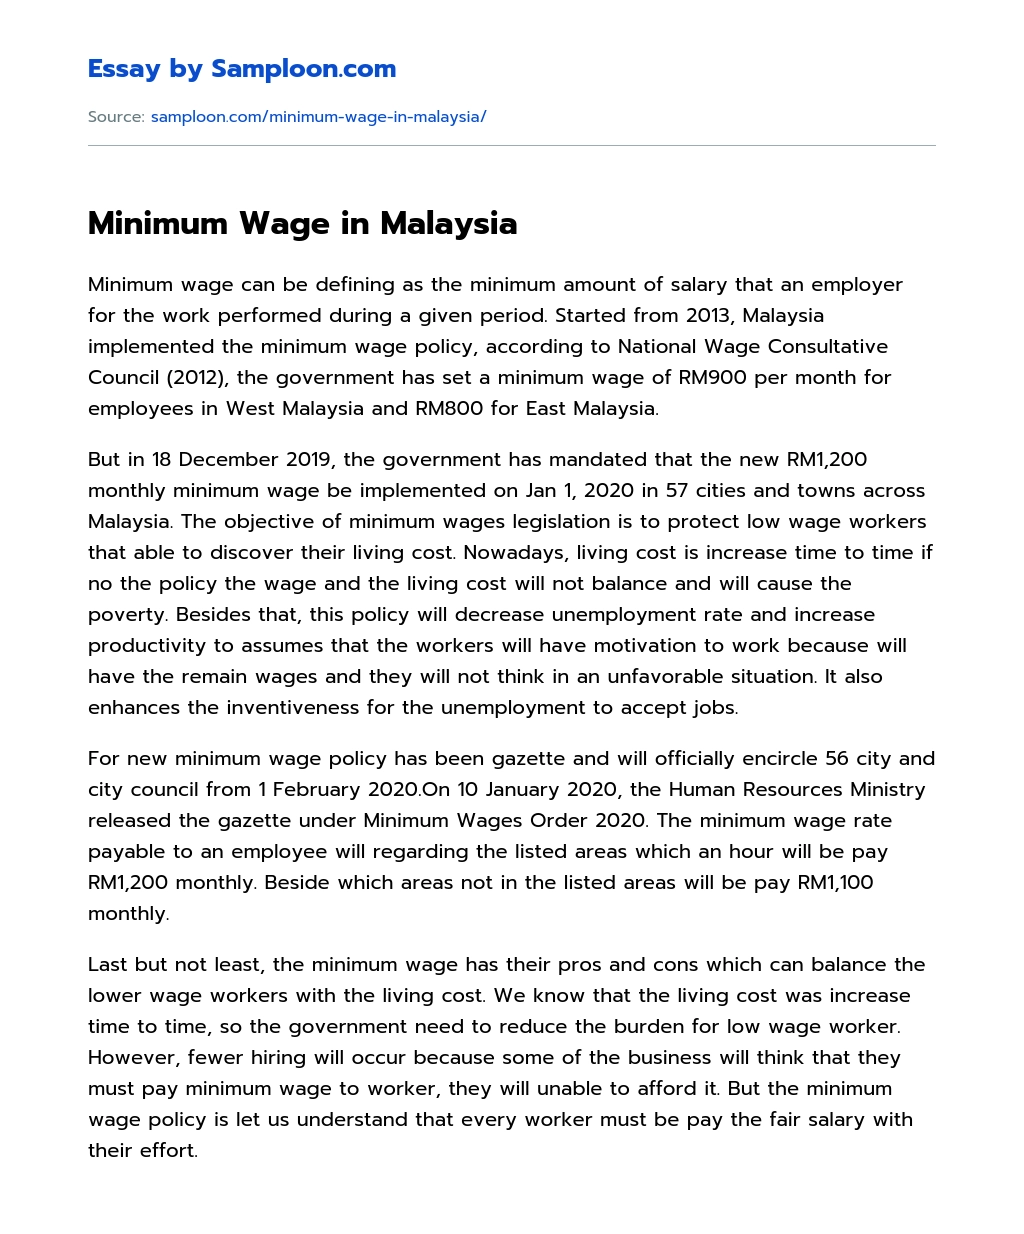 Minimum Wage in Malaysia essay